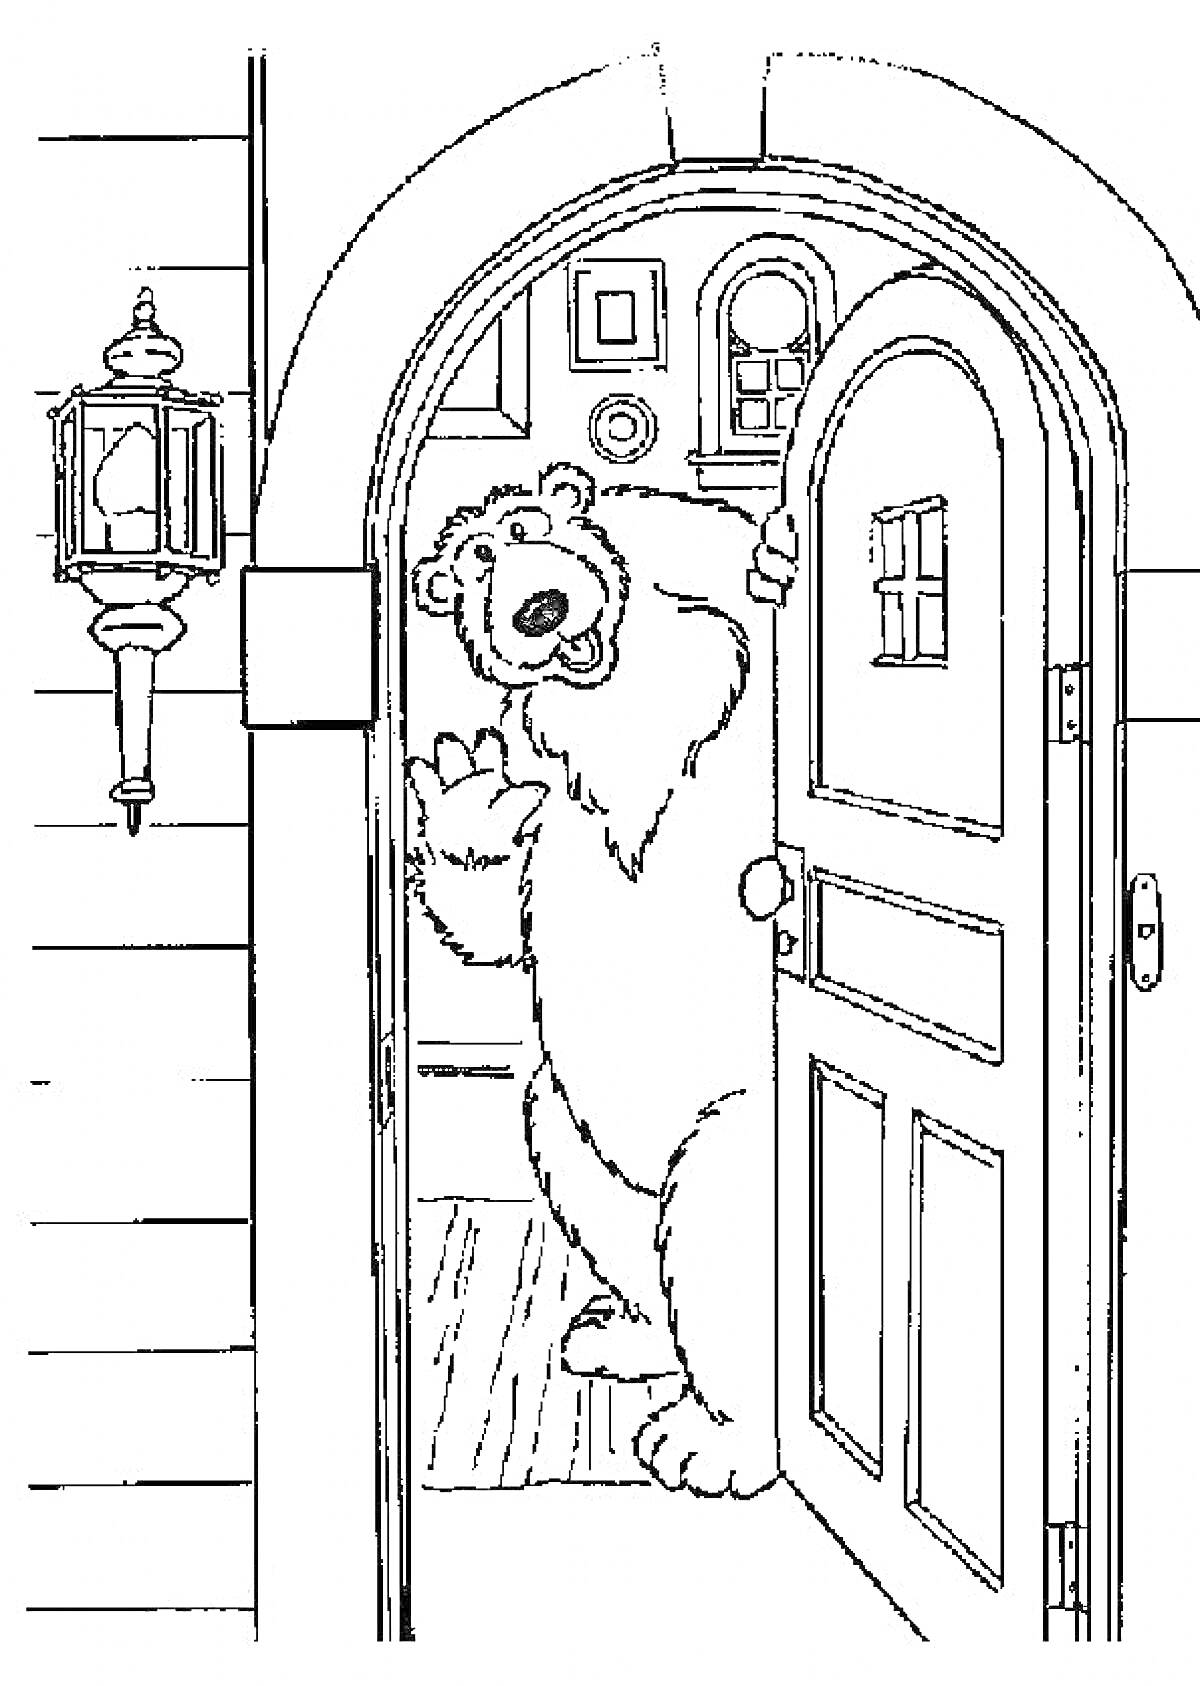 Раскраска Медведь, выглядывающий из-за двери с фонарем на стене и картинами внутри дома